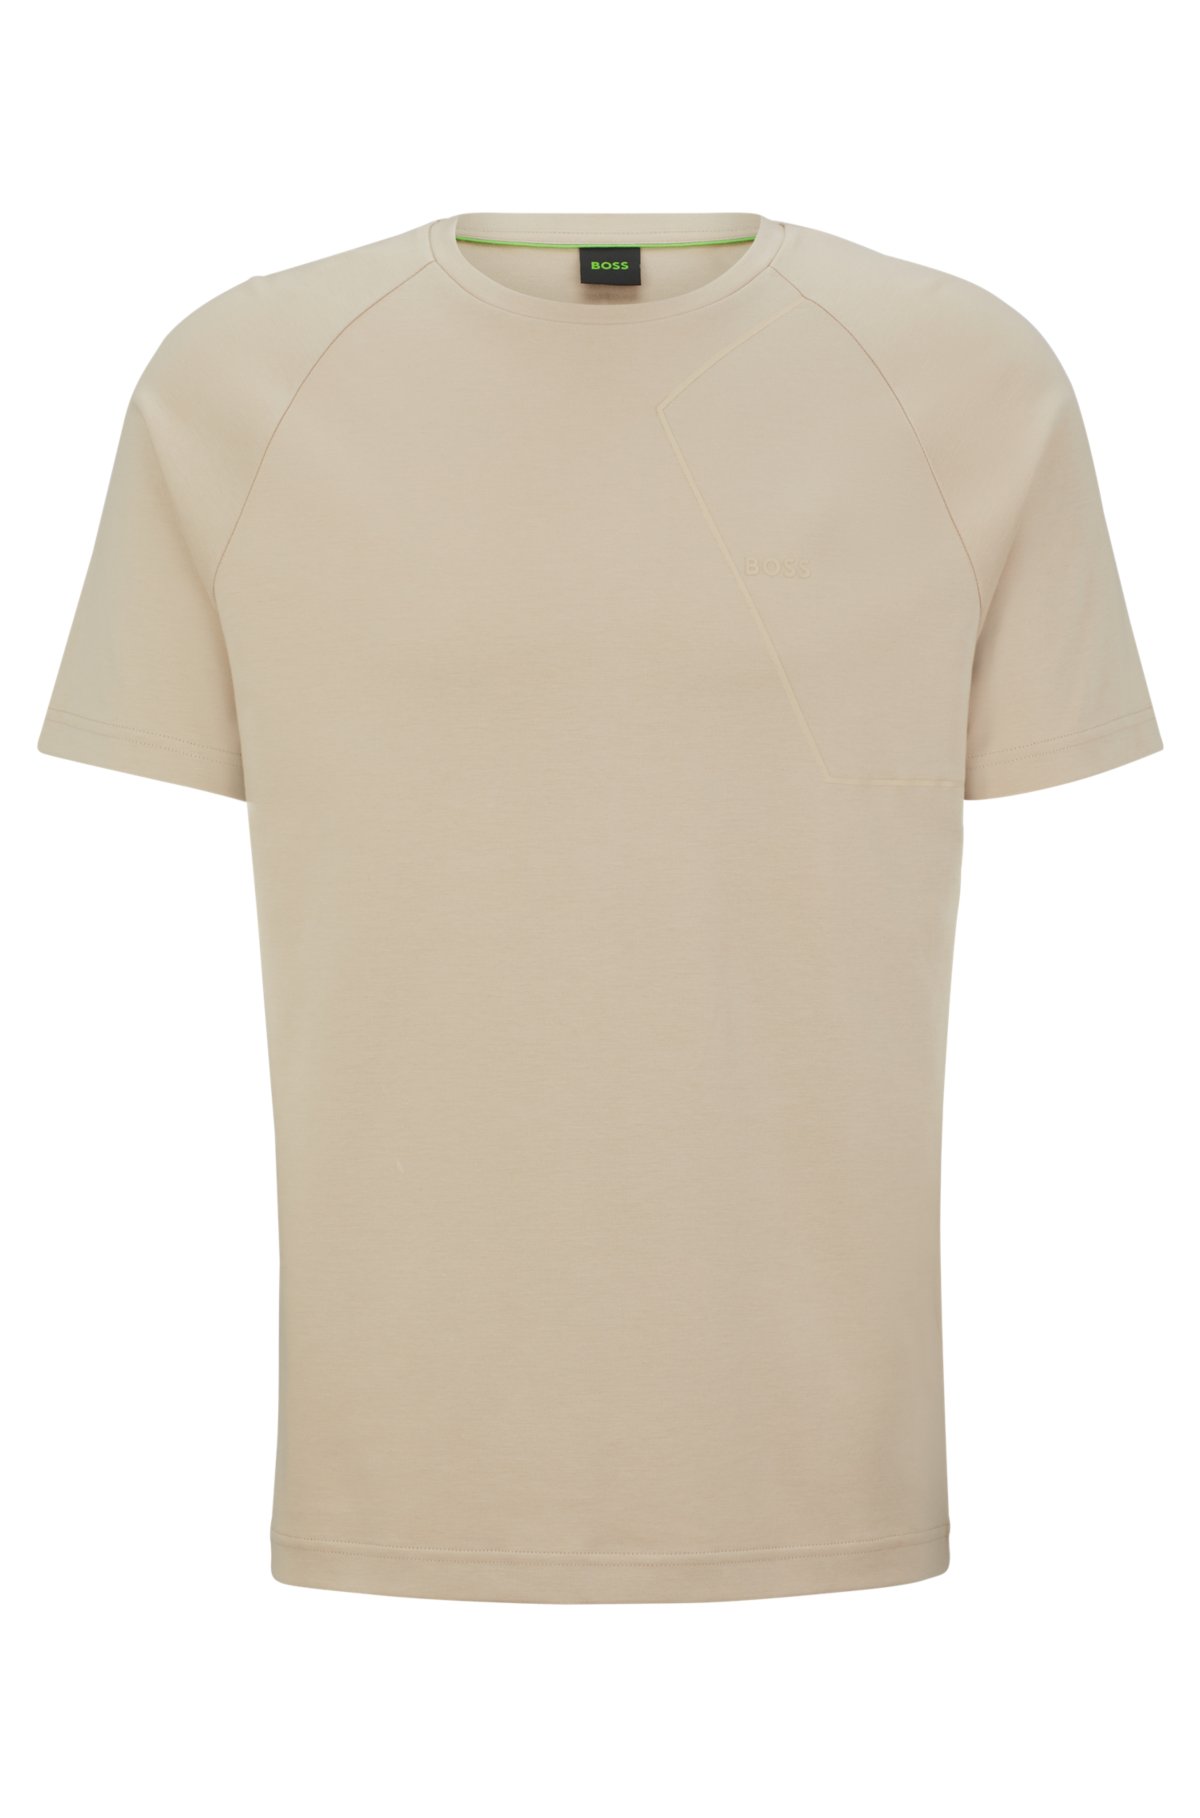 BOSS - Peppermint-finish T-shirt with gloss-print cotton artwork